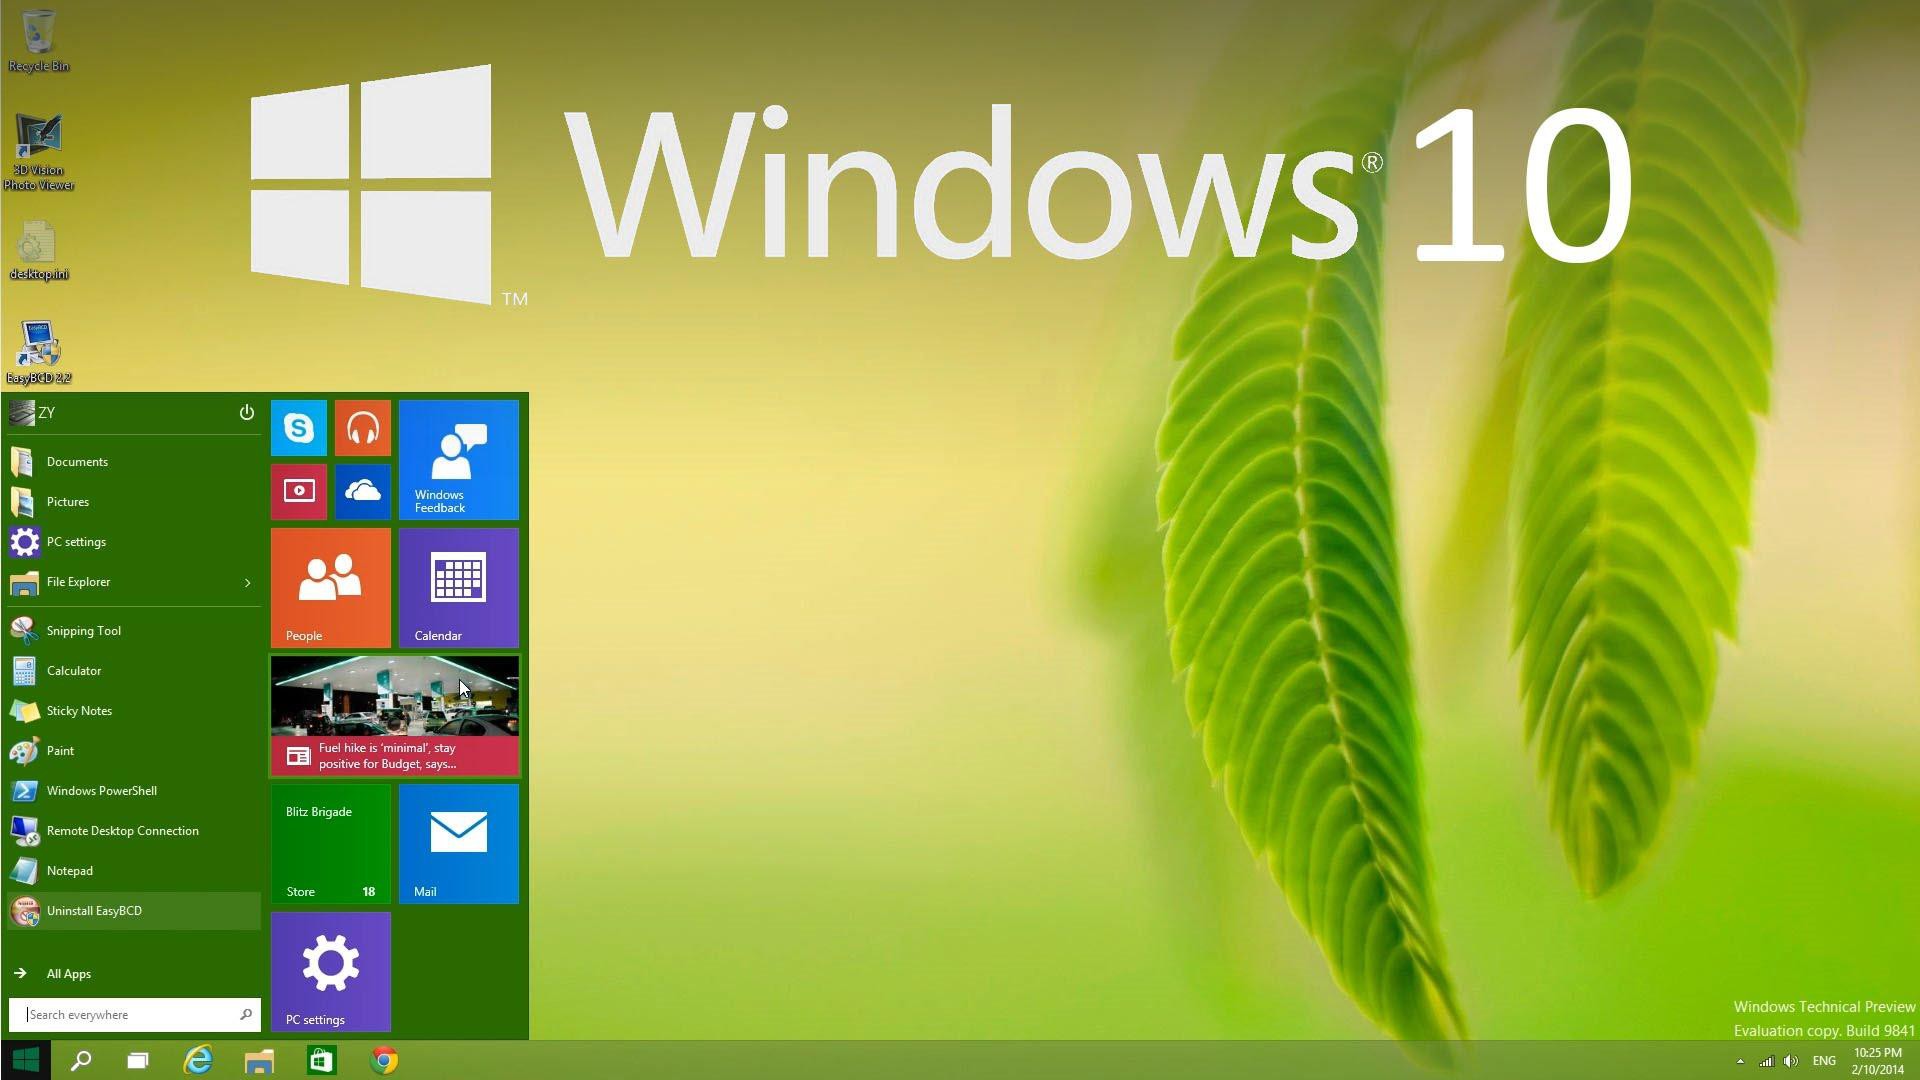 Kak windows 10. Операционная система Windows 10. Операционная система Windows 10 рабочий стол. Интерфейс виндовс 10. Windows 8 рабочий стол Интерфейс.